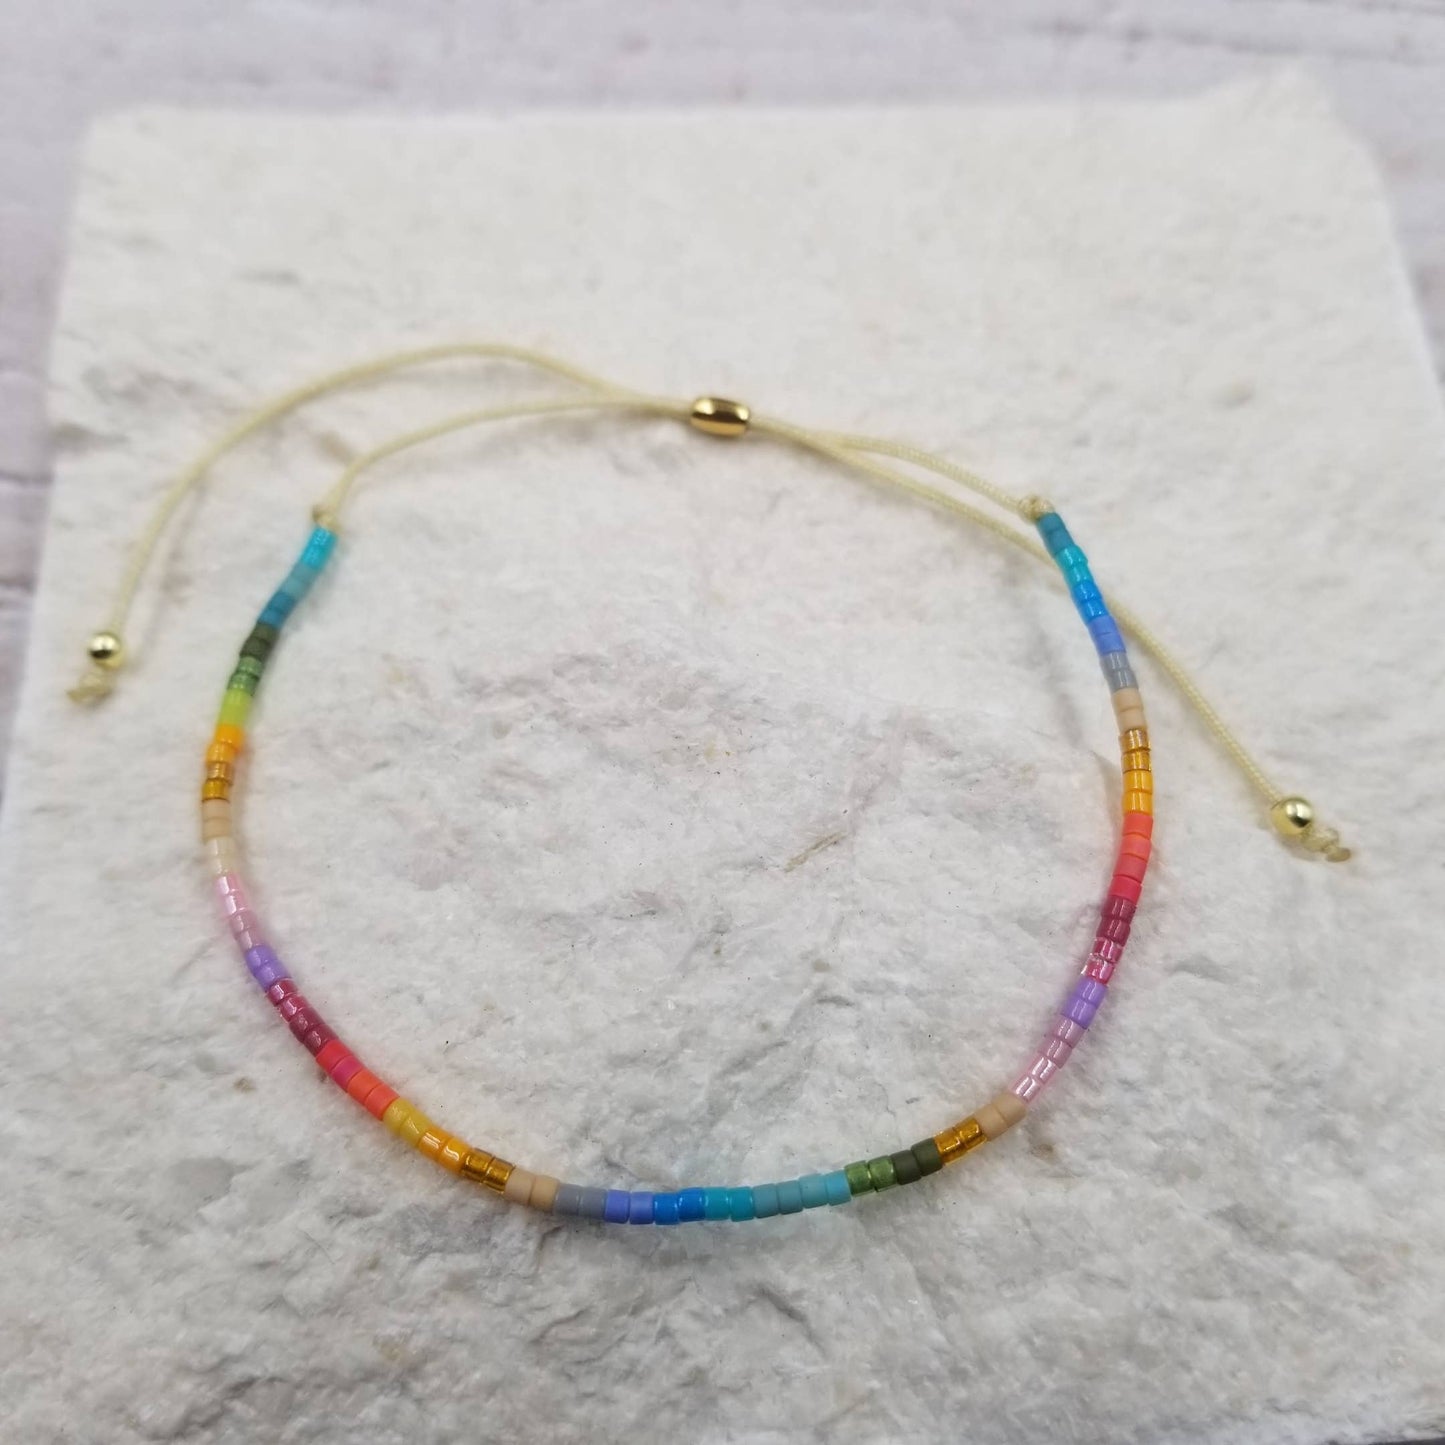 Handmade Bali Seed Beads Friendship Bracelet: A